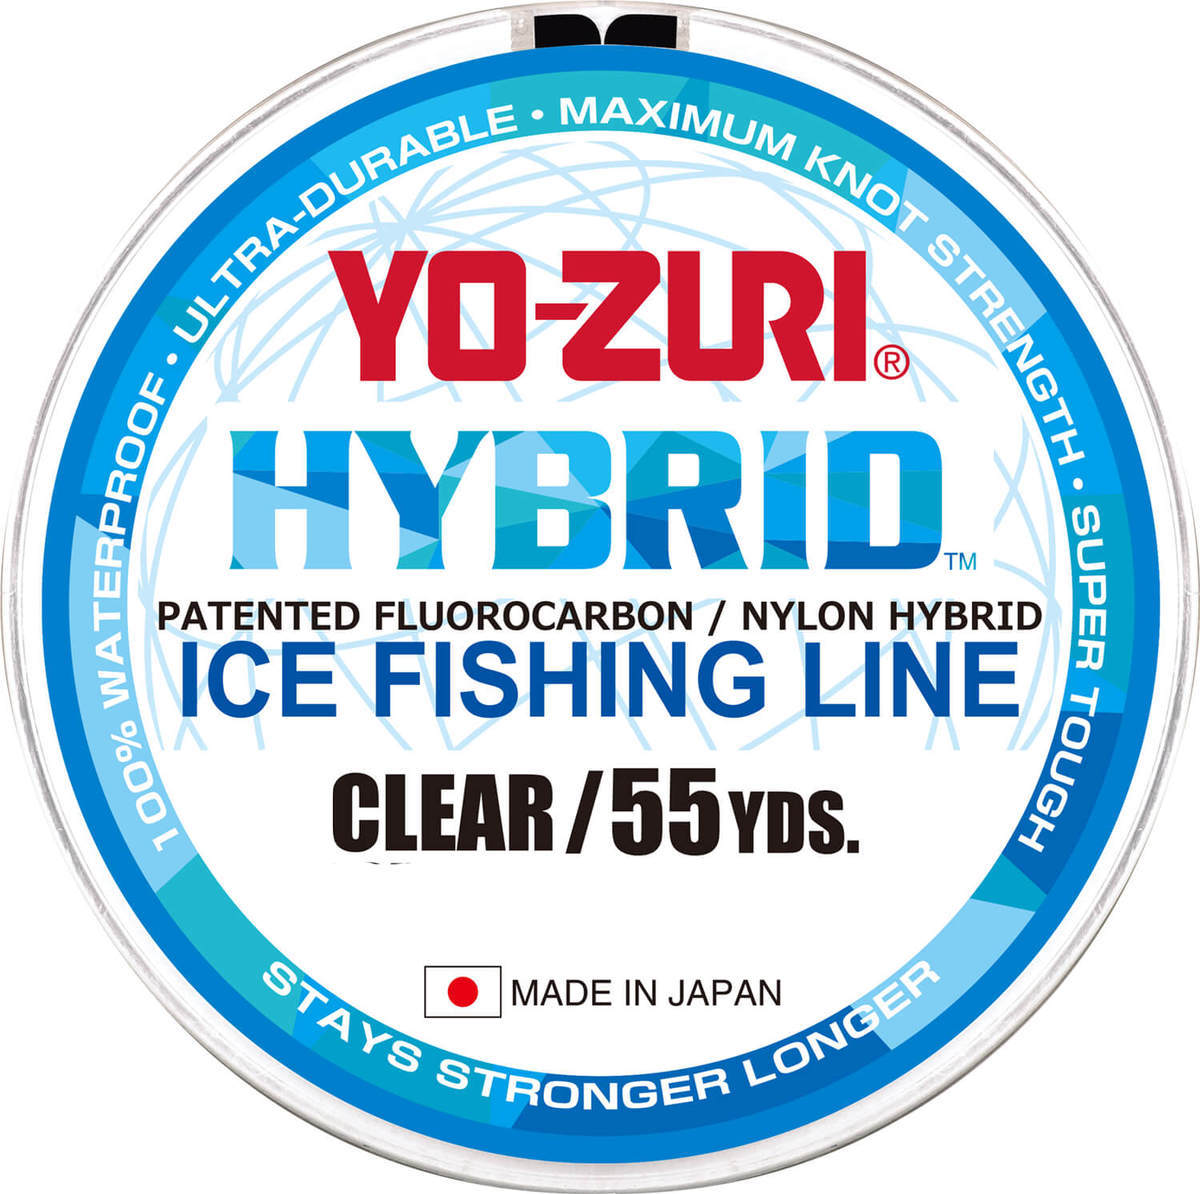 Yo-Zuri Hybrid Copolymer Ice fishing Line